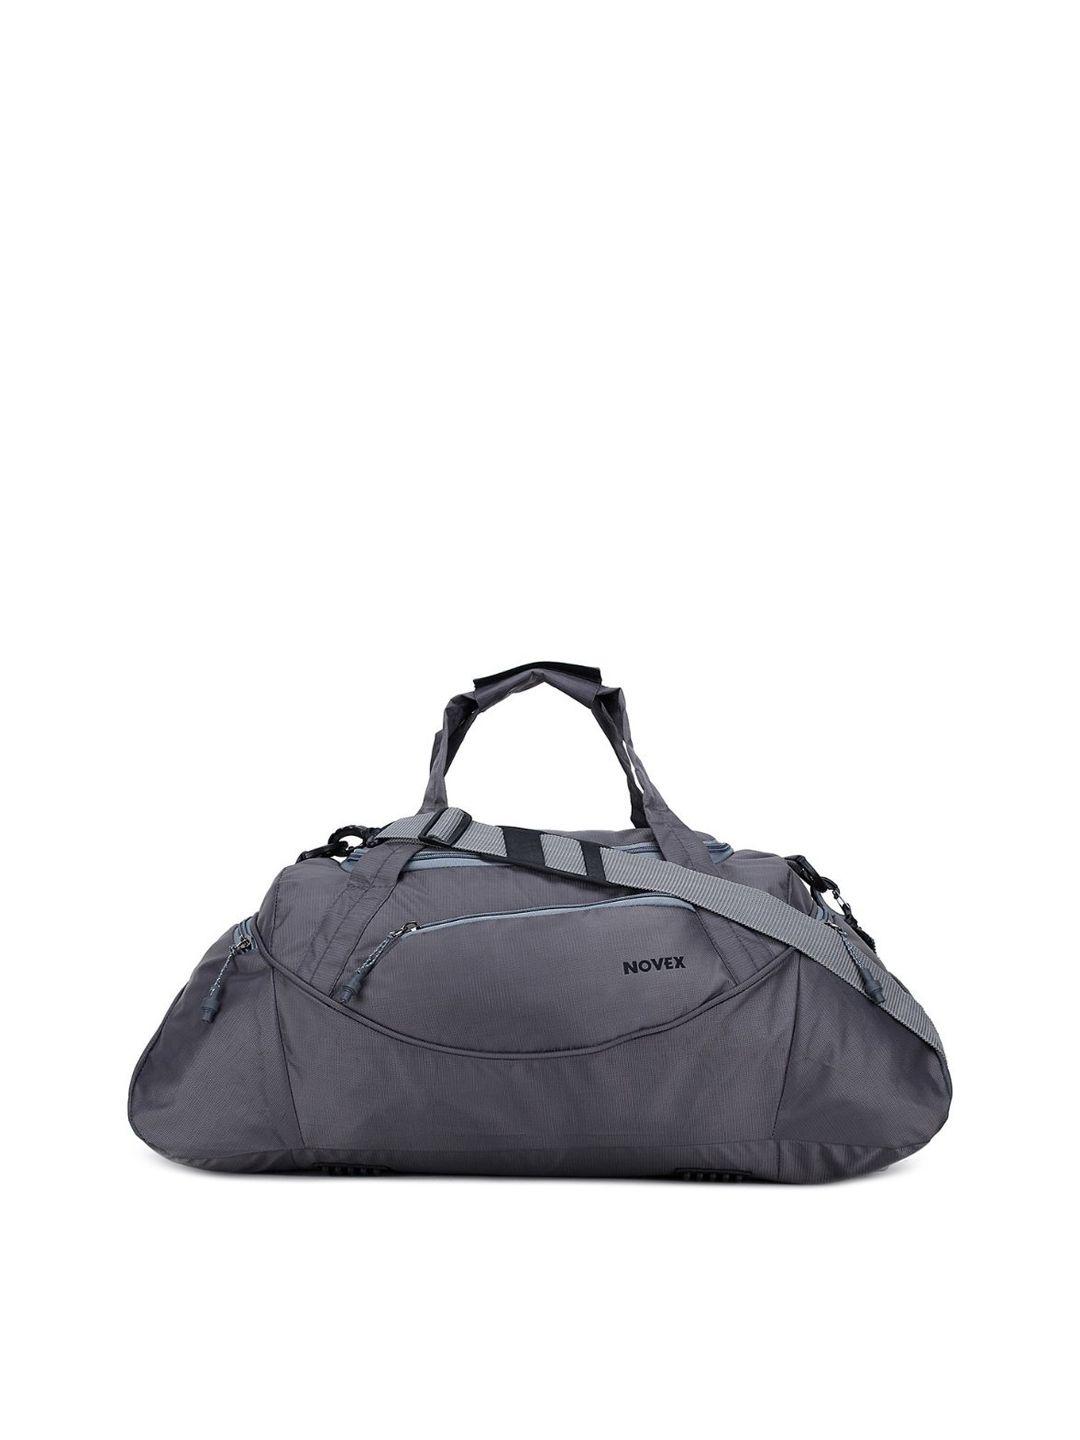 novex grey solid medium travel duffle bag